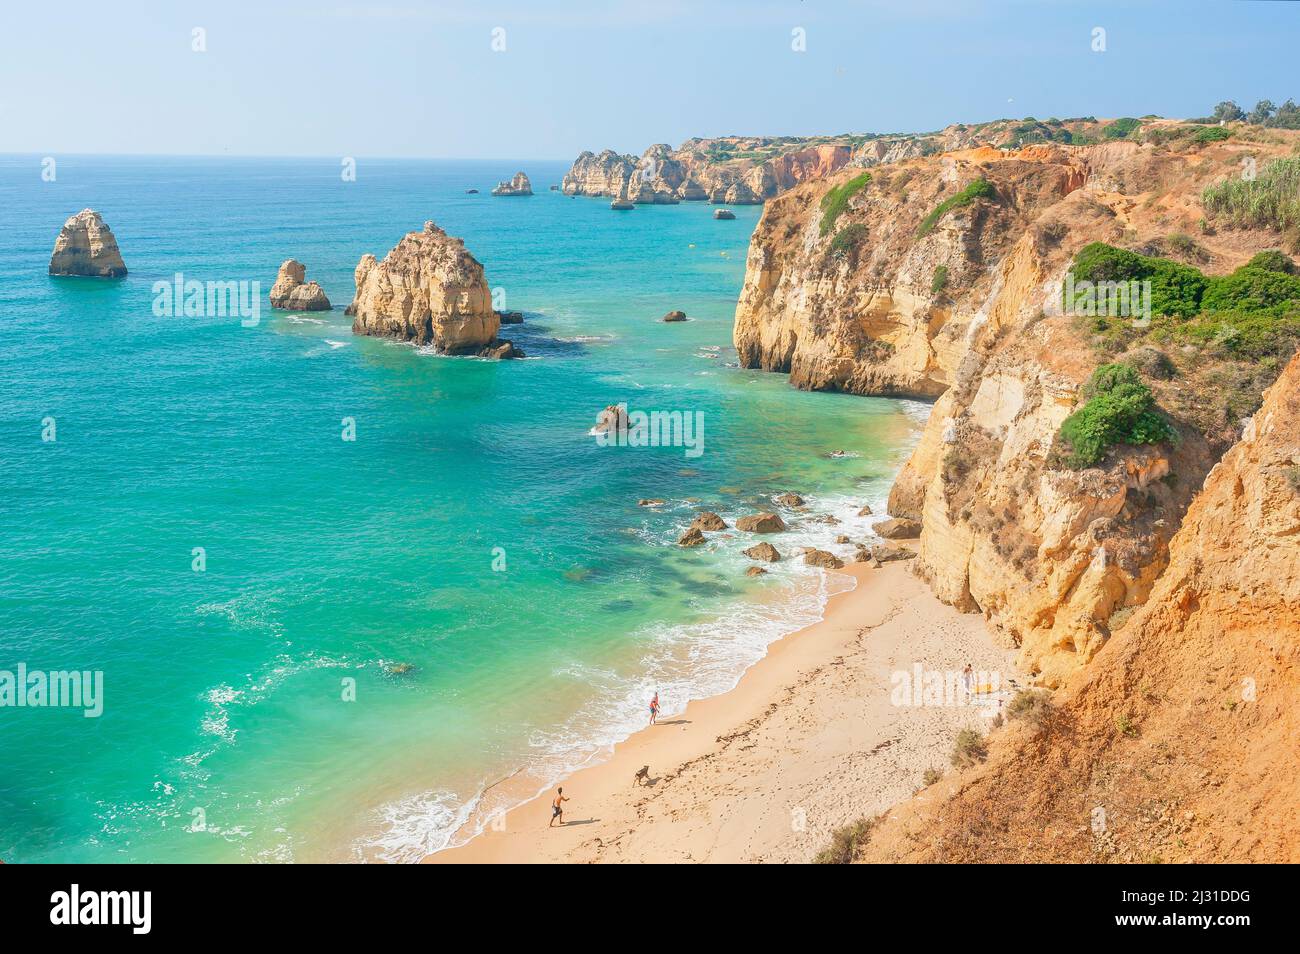 Dona Ana beach, Lagos, Algarve, Portugal Stock Photo